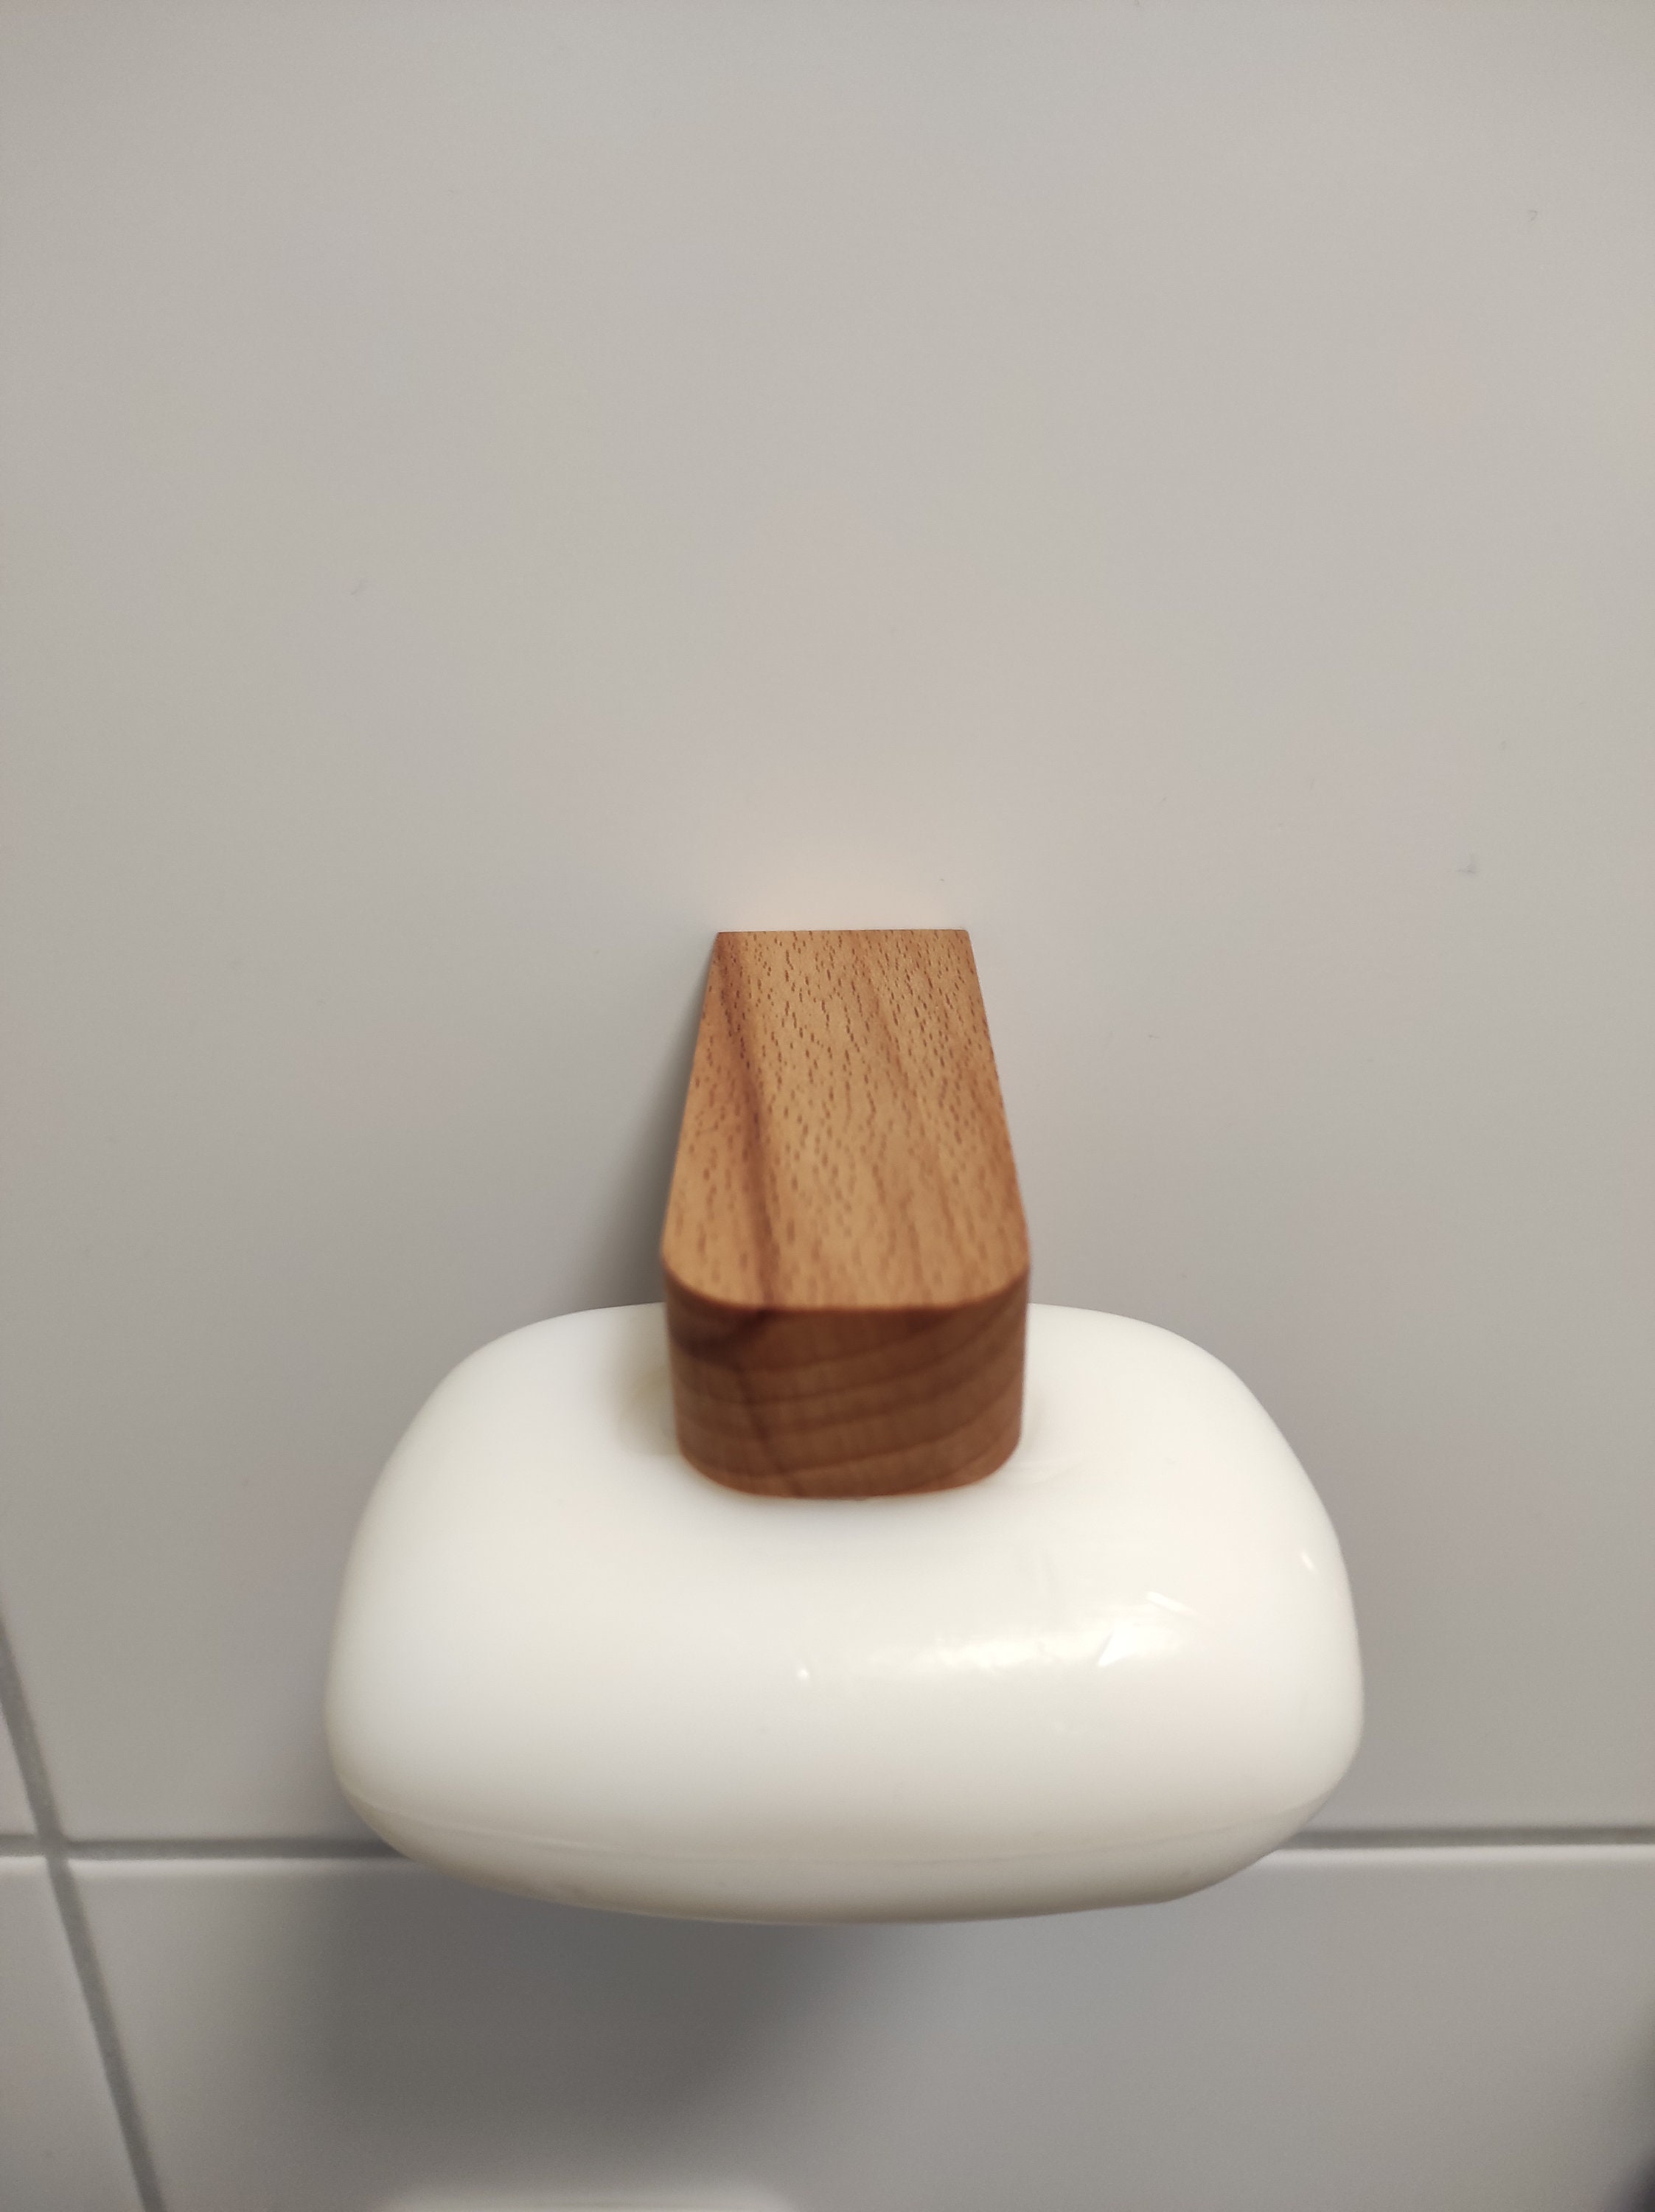 1/2 PCS Magnetic Soap Holder, Wall Mount Soap Dish, Self-Adhesive